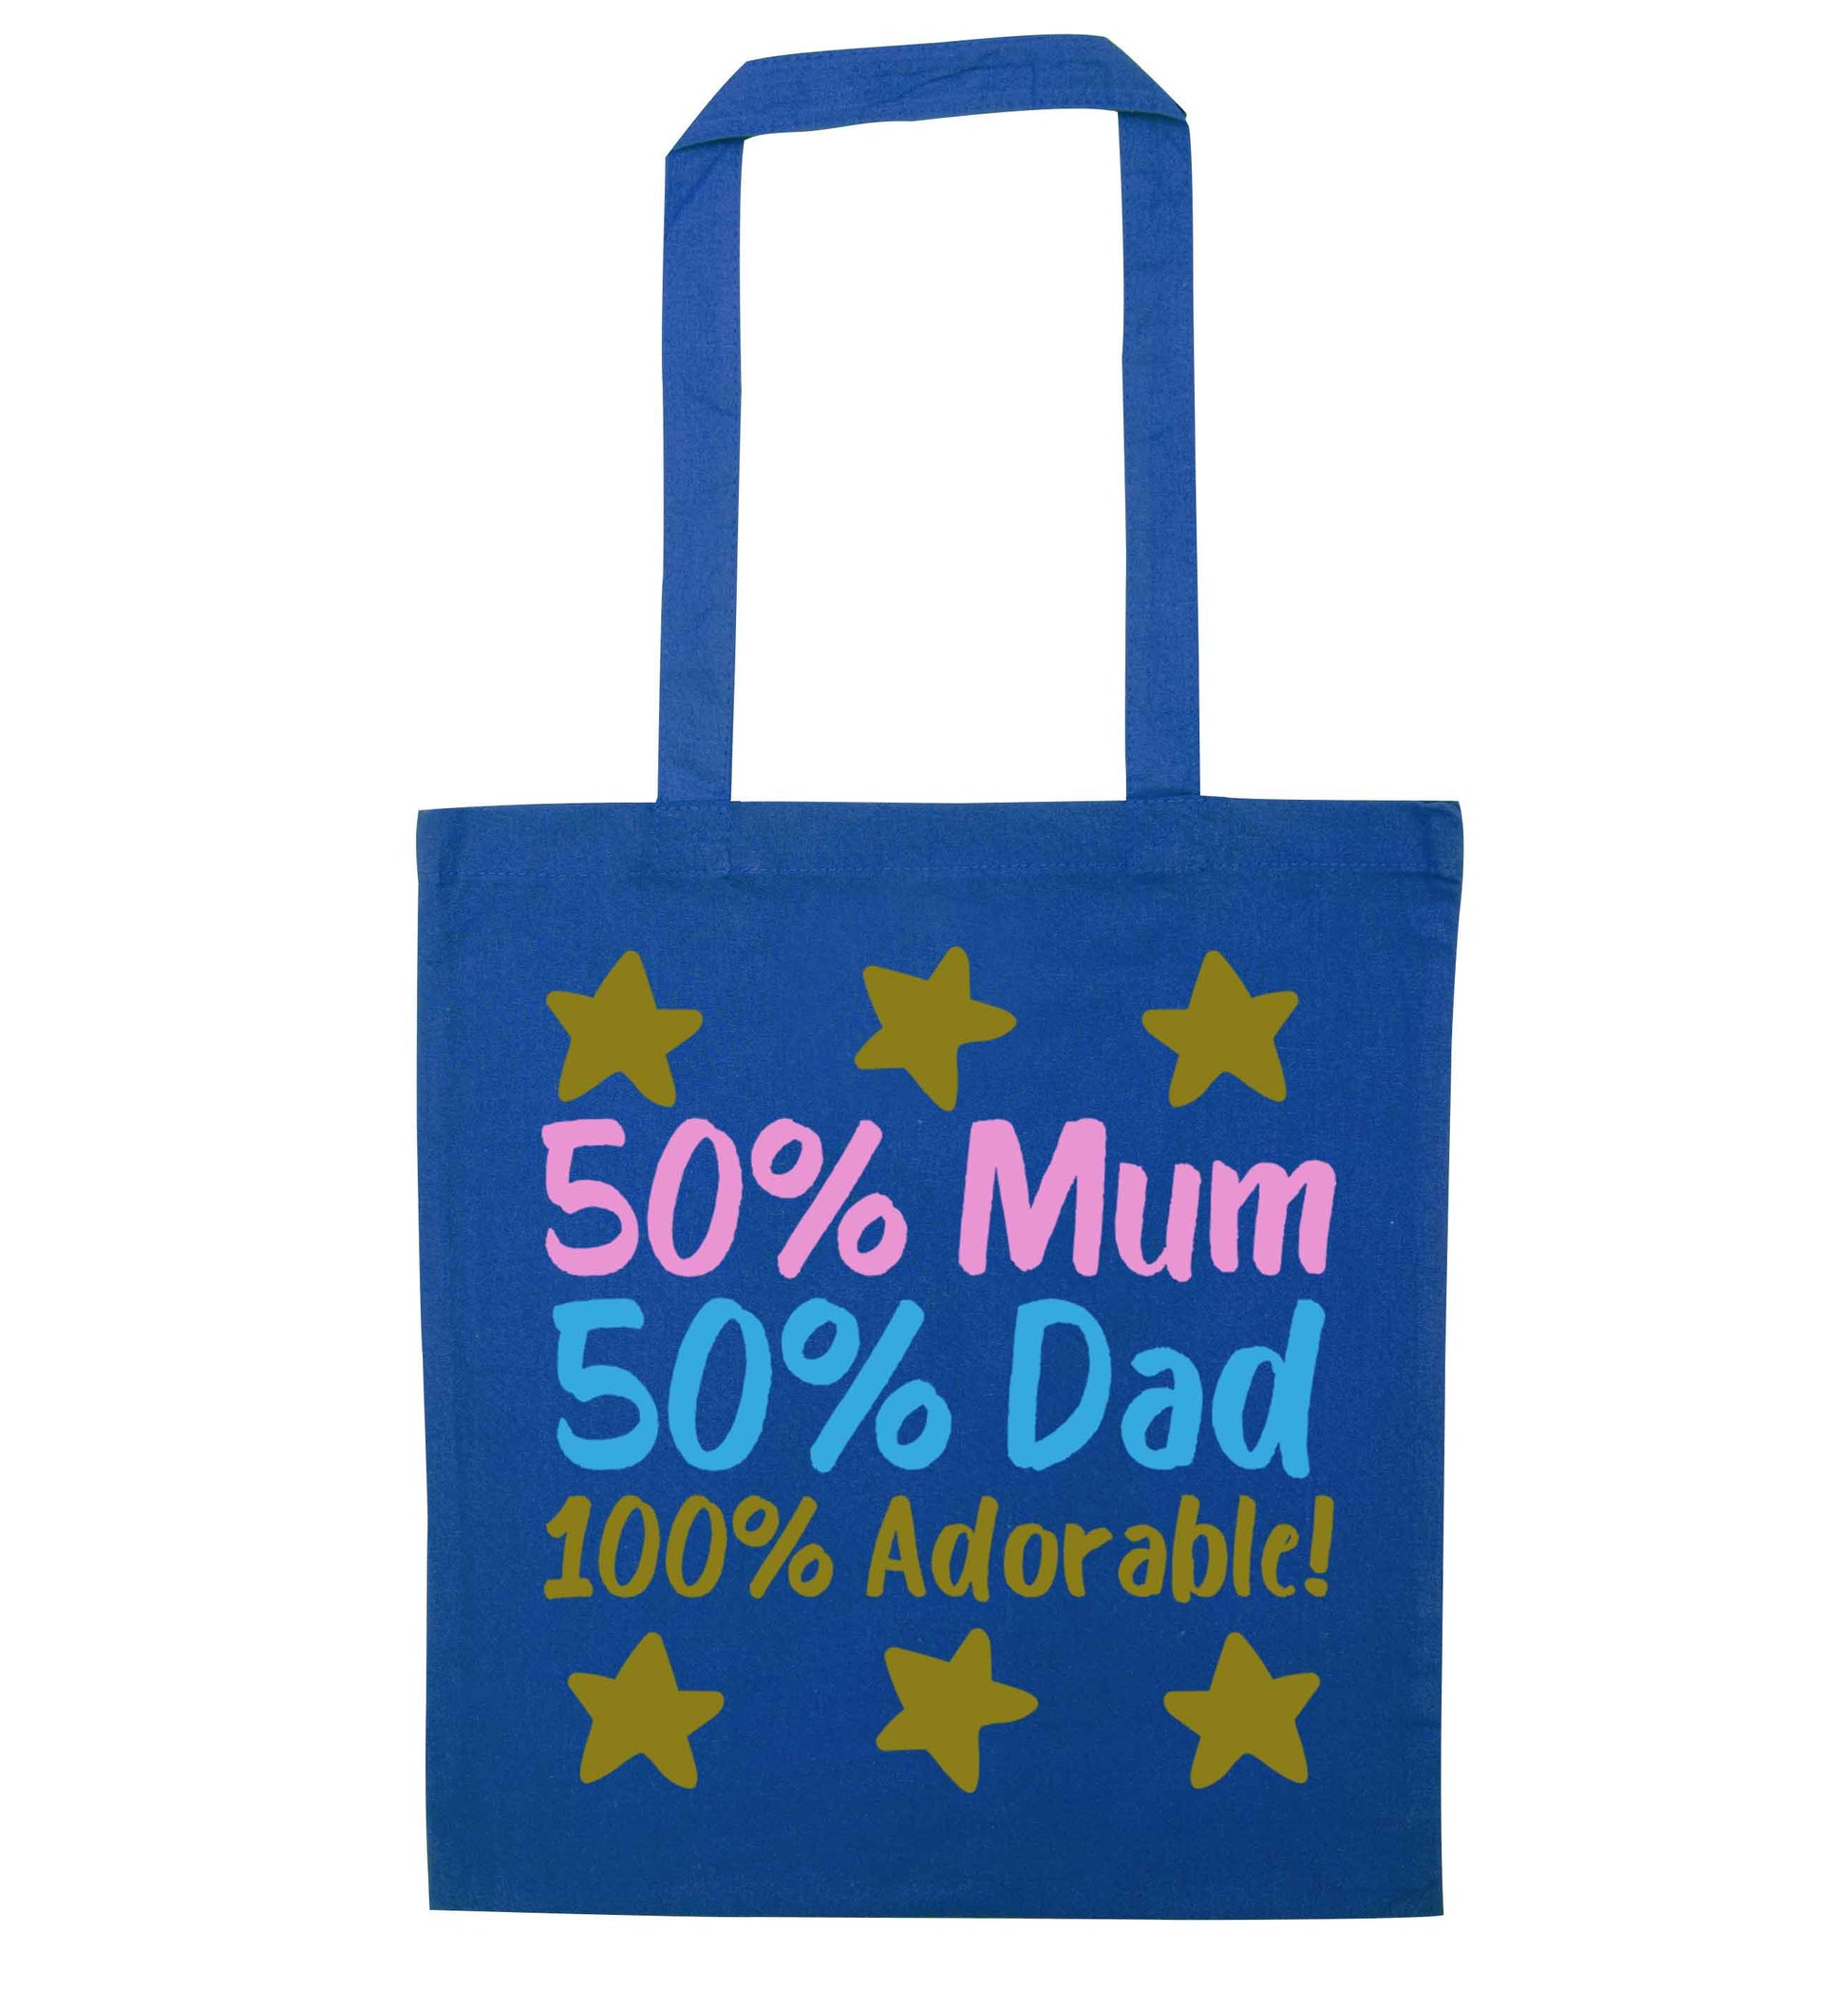 50% mum 50% dad 100% adorable blue tote bag